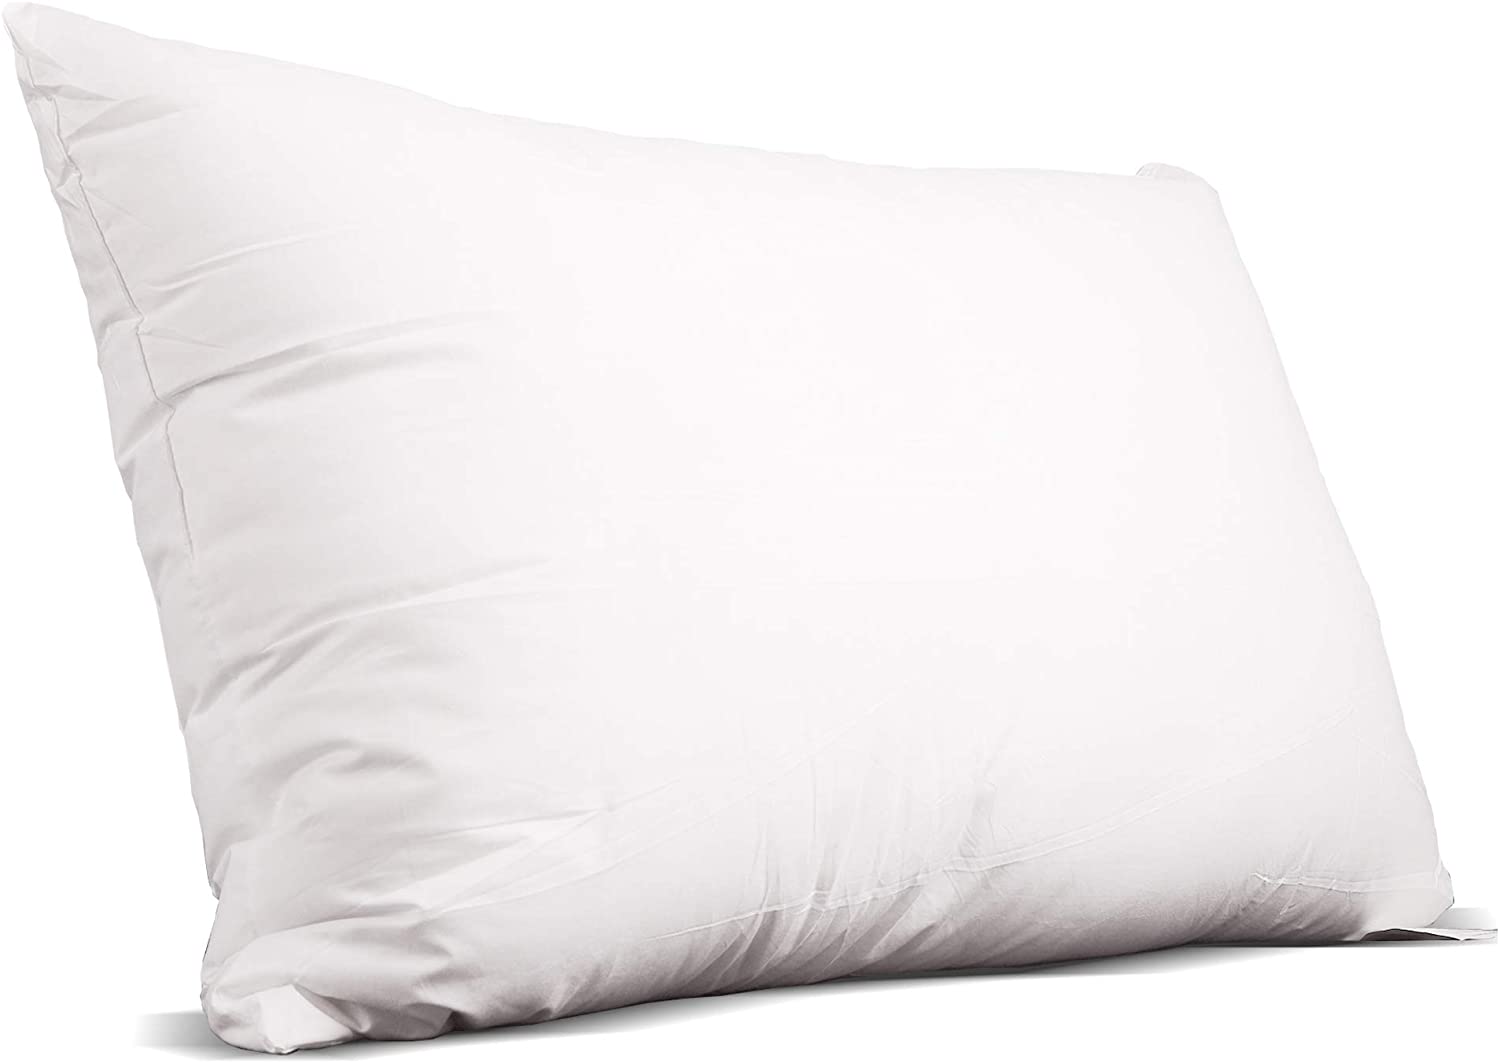 Edow Luxury Soft Pillows for Sleeping